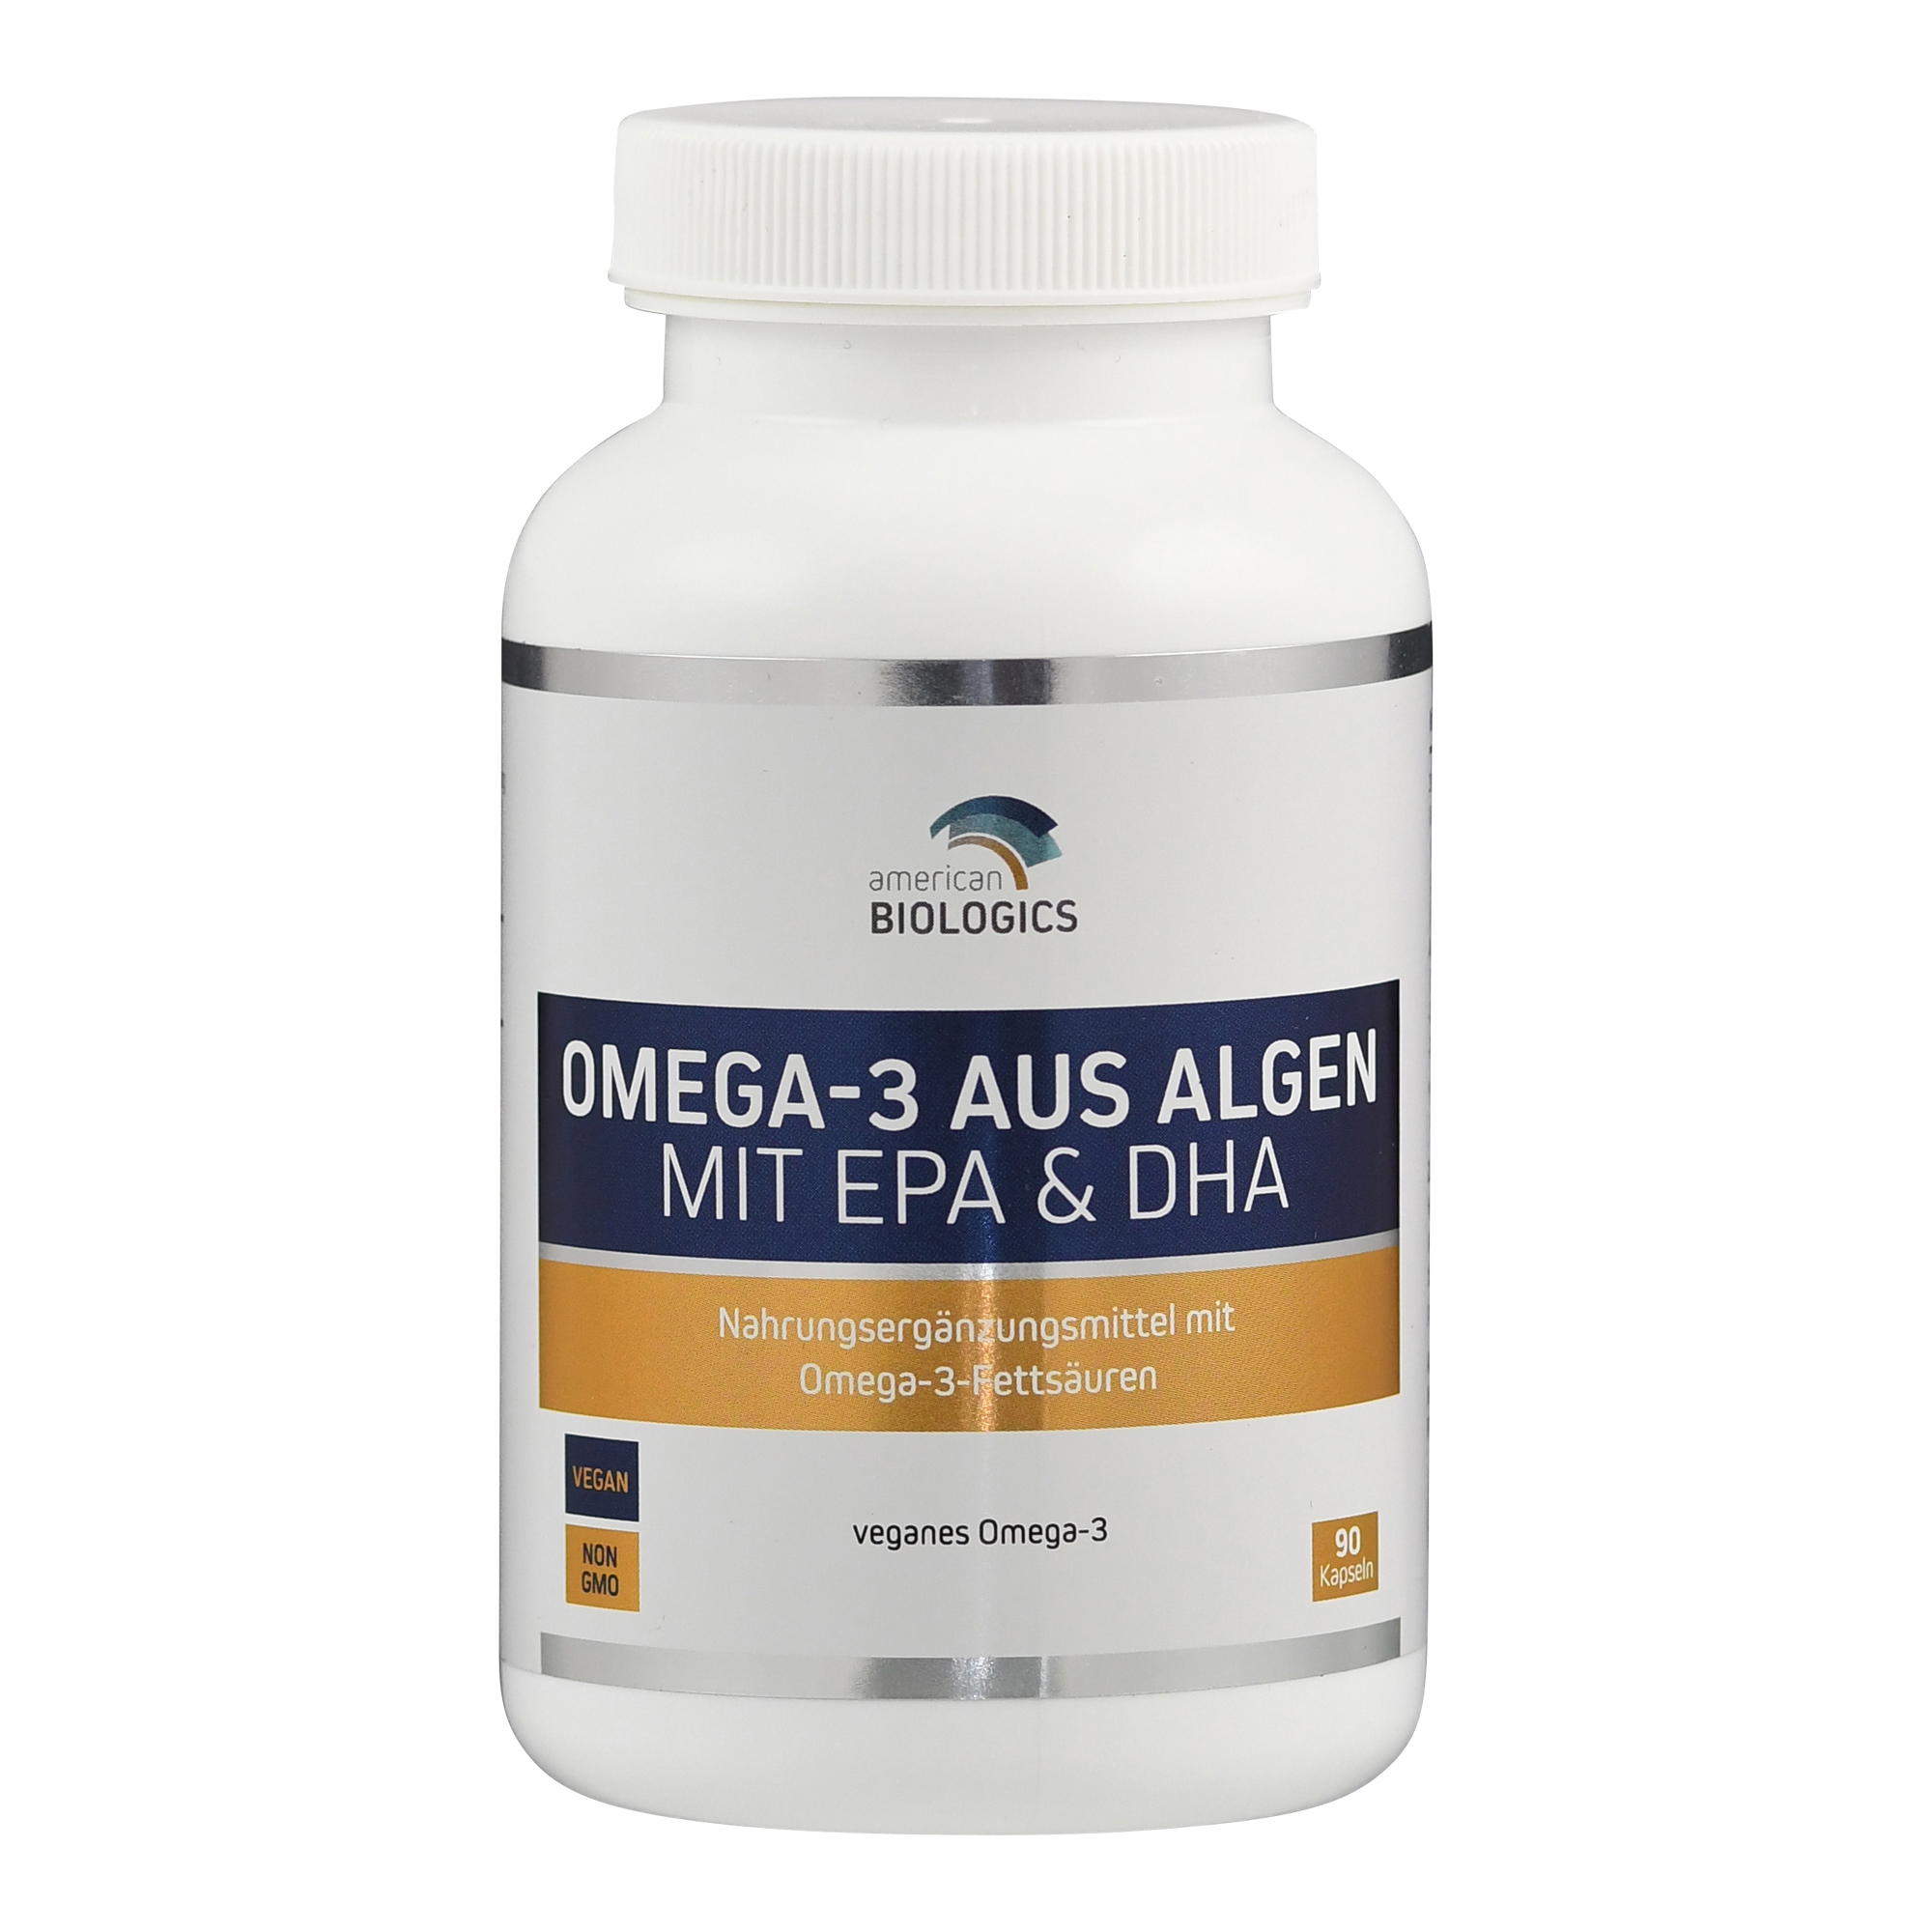 Omega-3 vegan mit EPA & DHA von American Biologics.